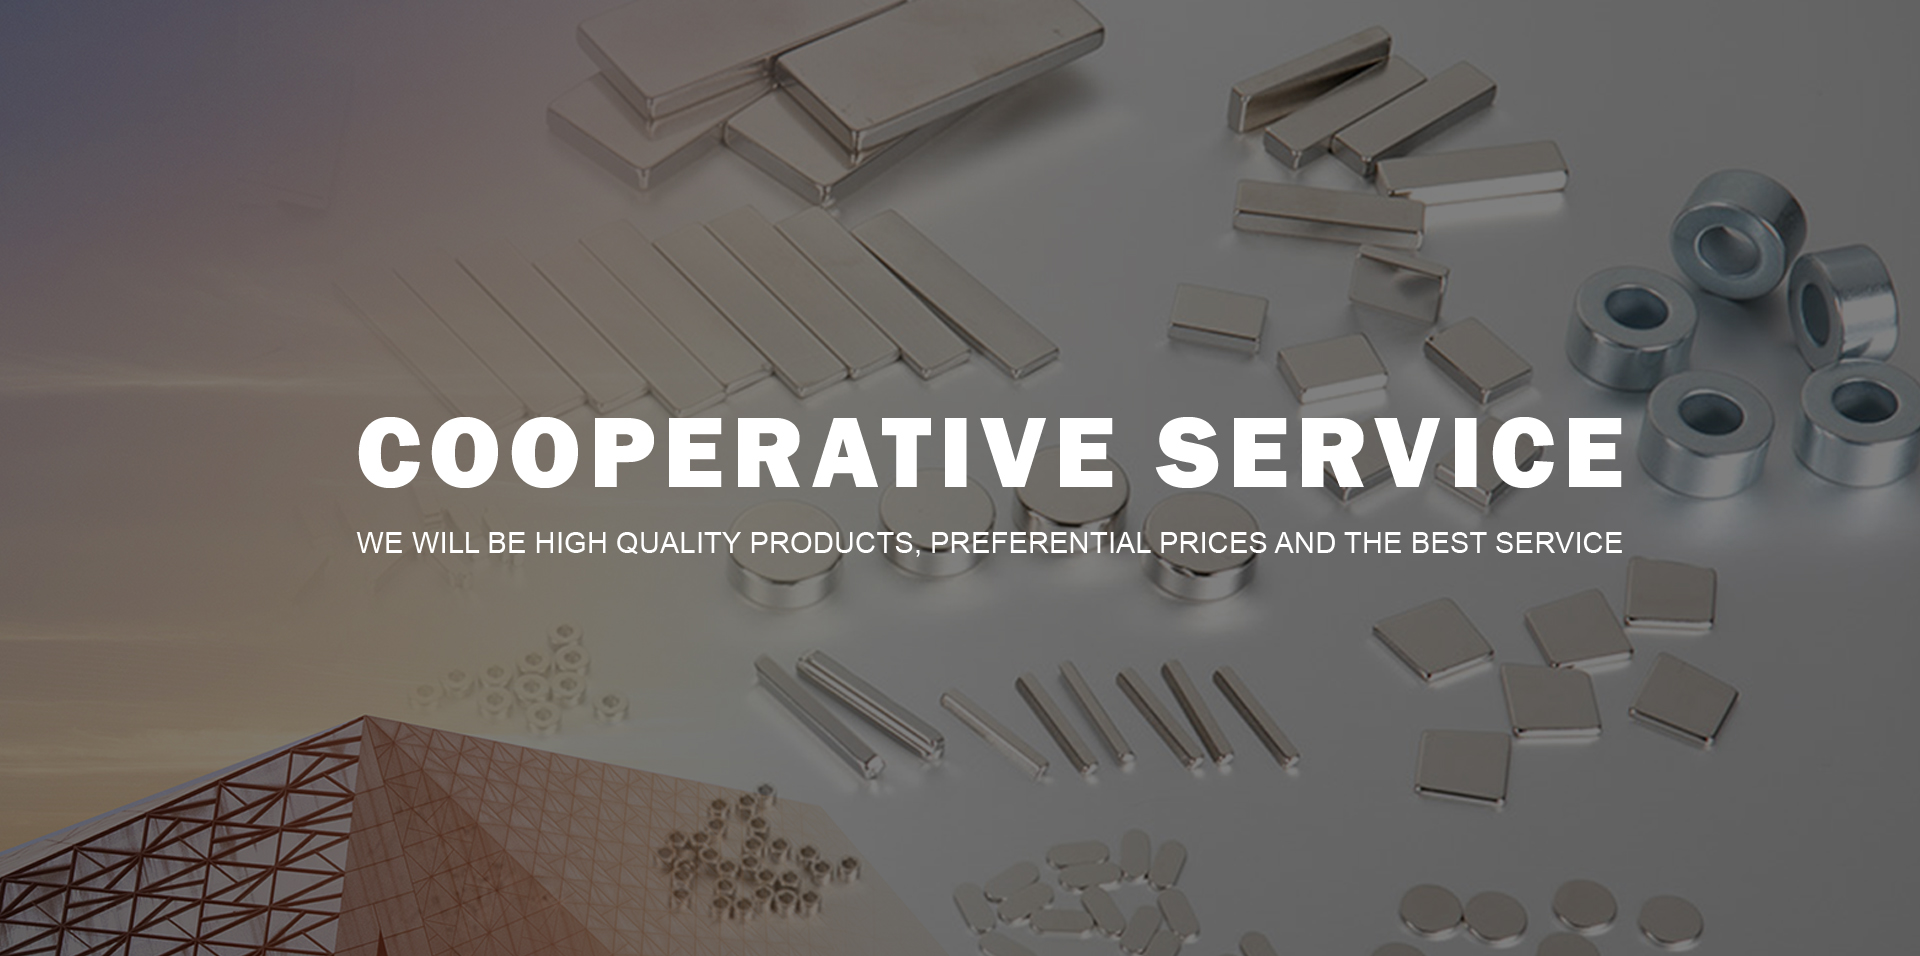 Cooperative service